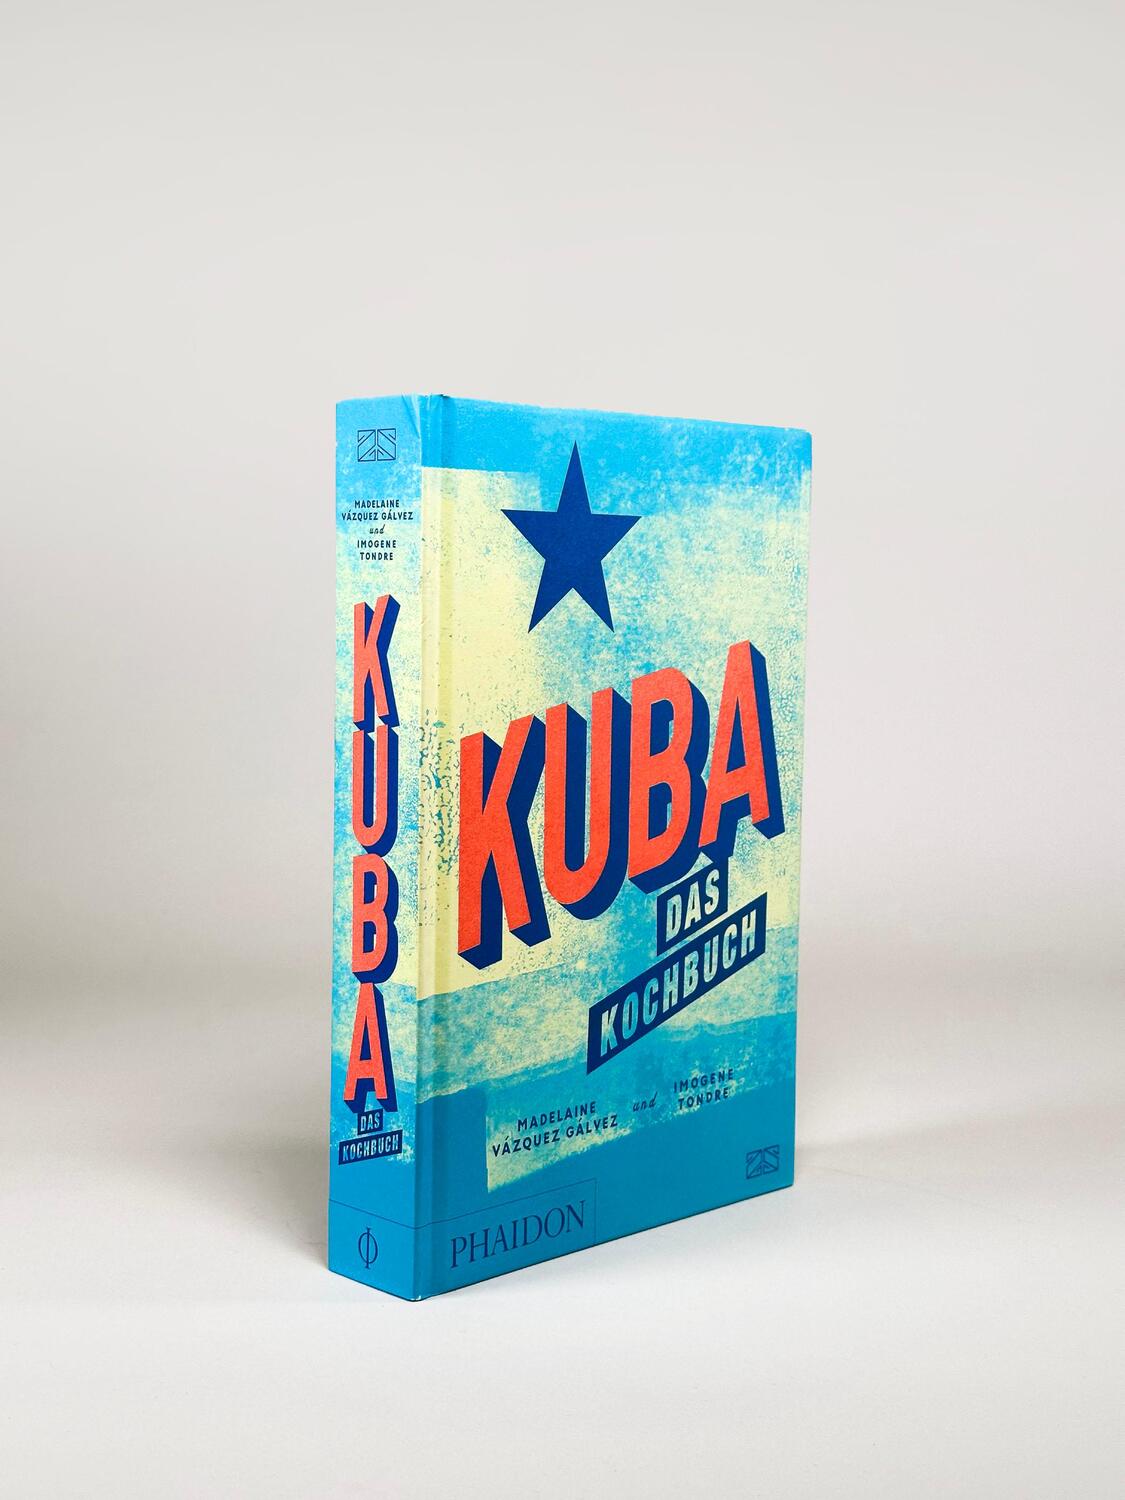 Bild: 9783947426058 | Kuba - das Kochbuch | Madelaine Vázquez Gálvez | Buch | 432 S. | 2018